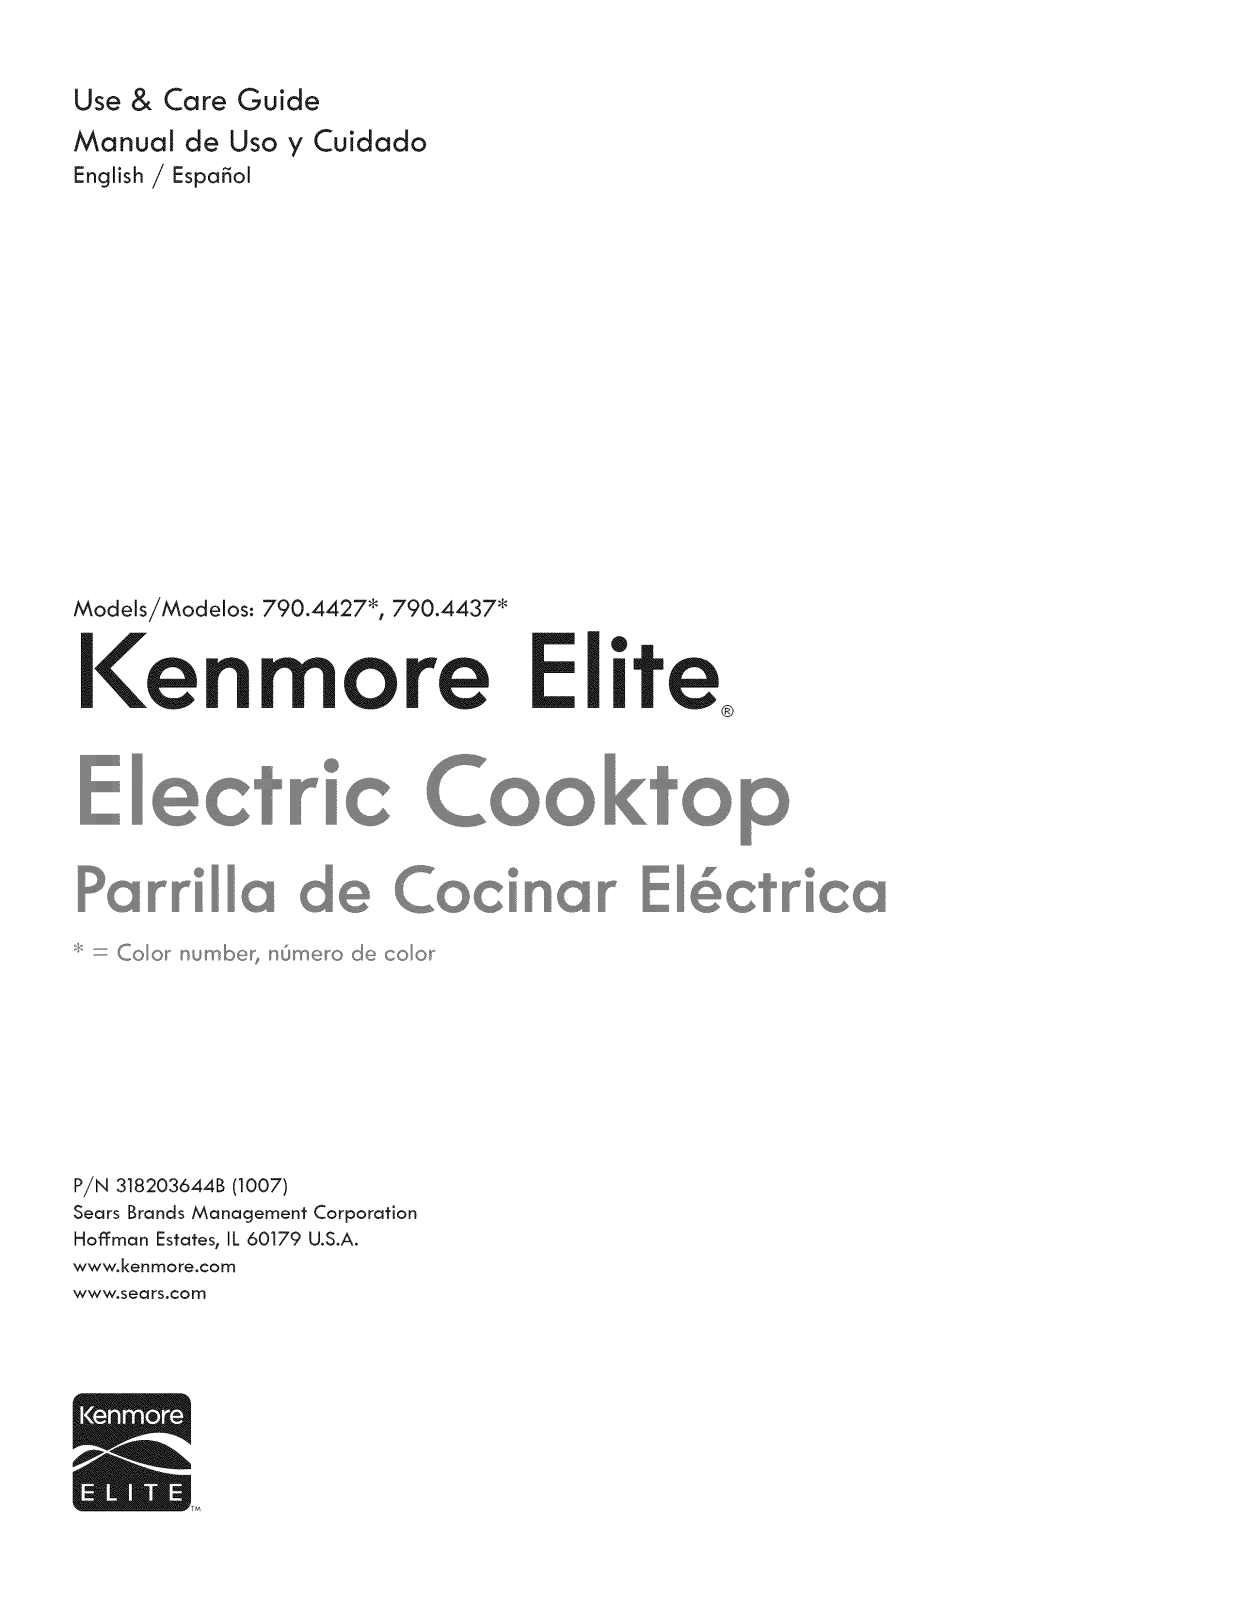 Kenmore Elite 79044373000, 79044379001, 79044379000, 79044373001, 79044372001 Owner’s Manual